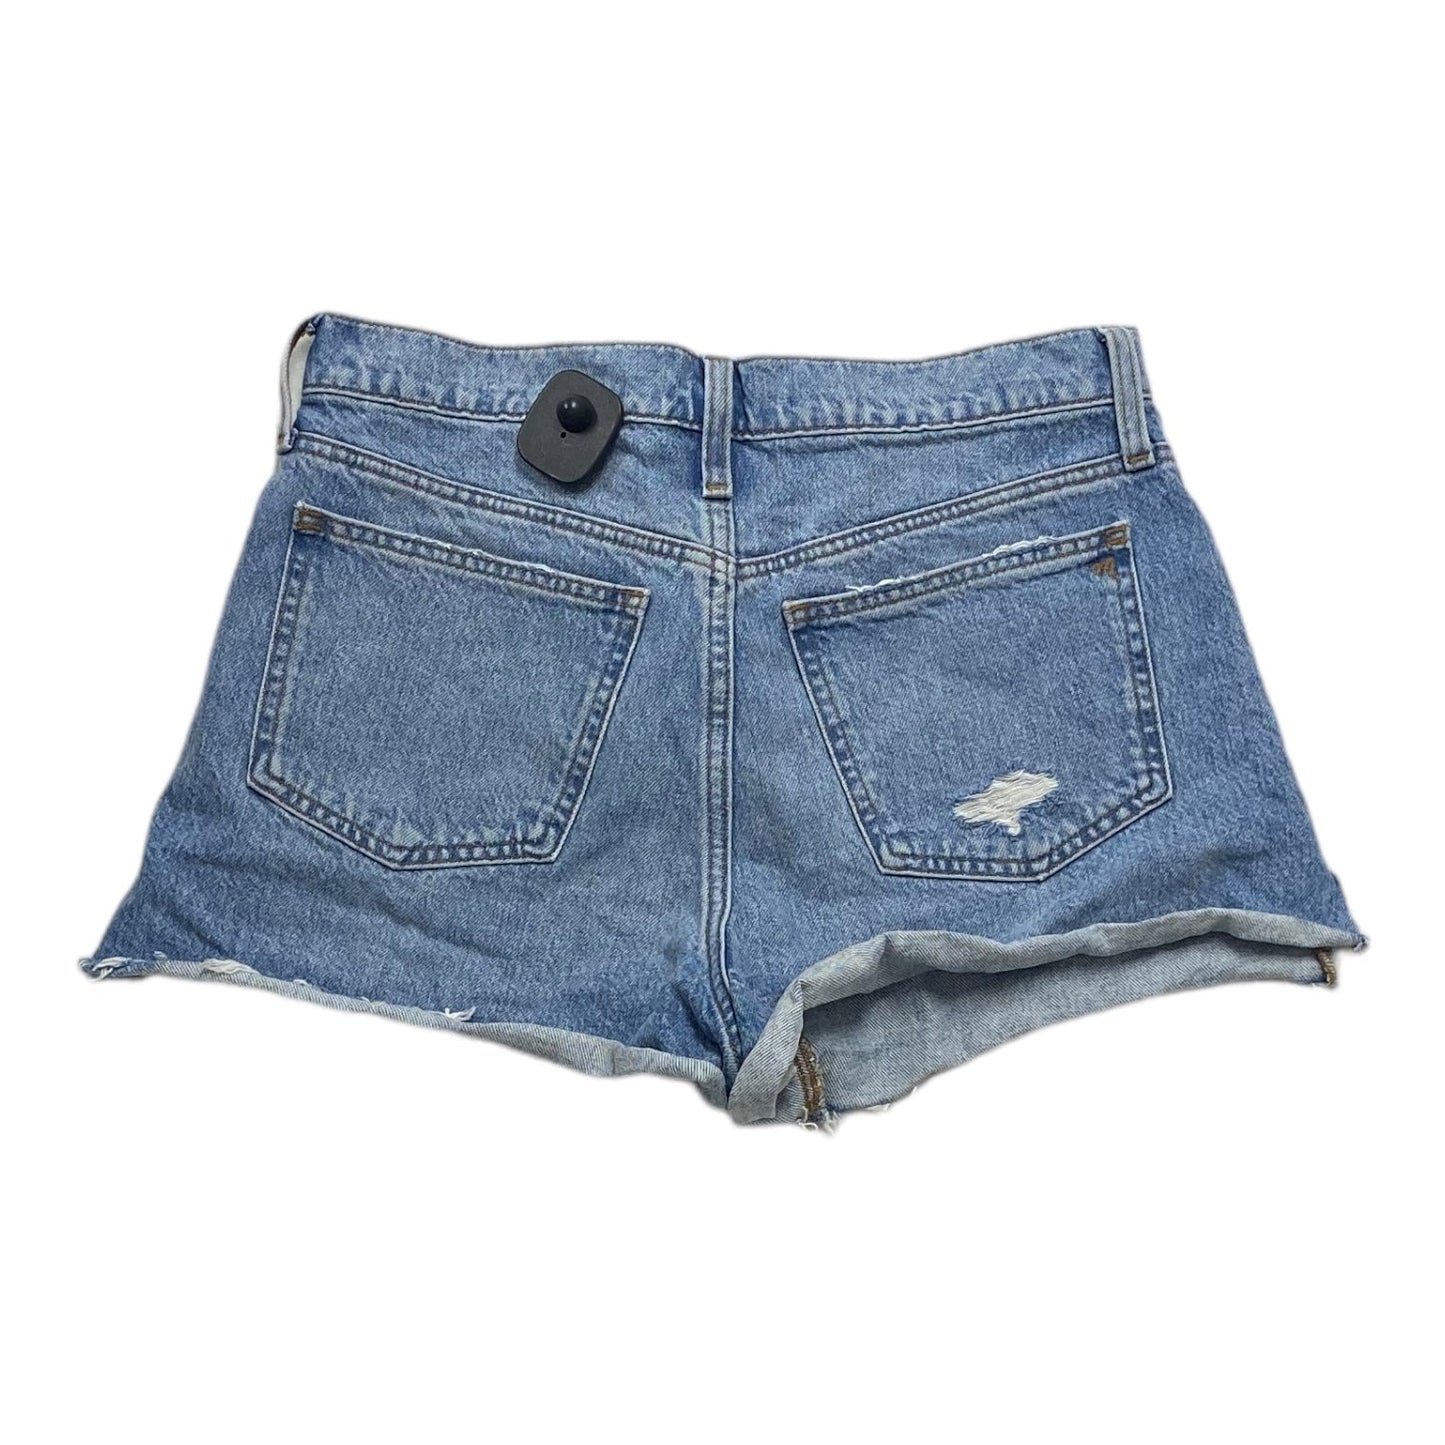 Blue Denim Shorts Madewell, Size 4